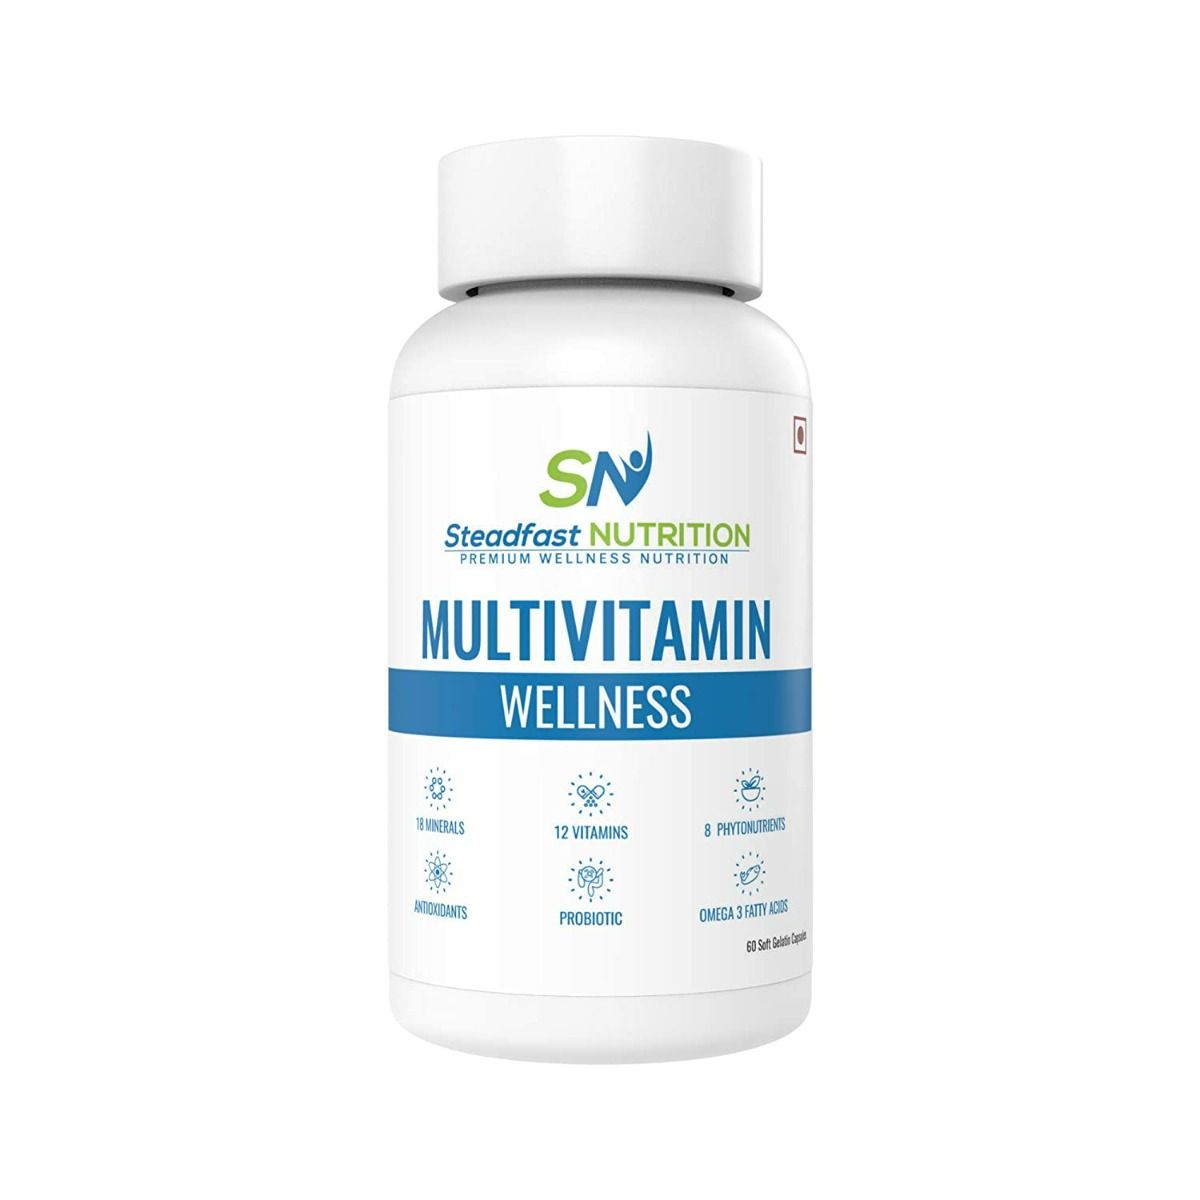 Steadfast Nutrition Multivitamin Wellness, 60 Soft Gelatin Capsules, Pack of 1 